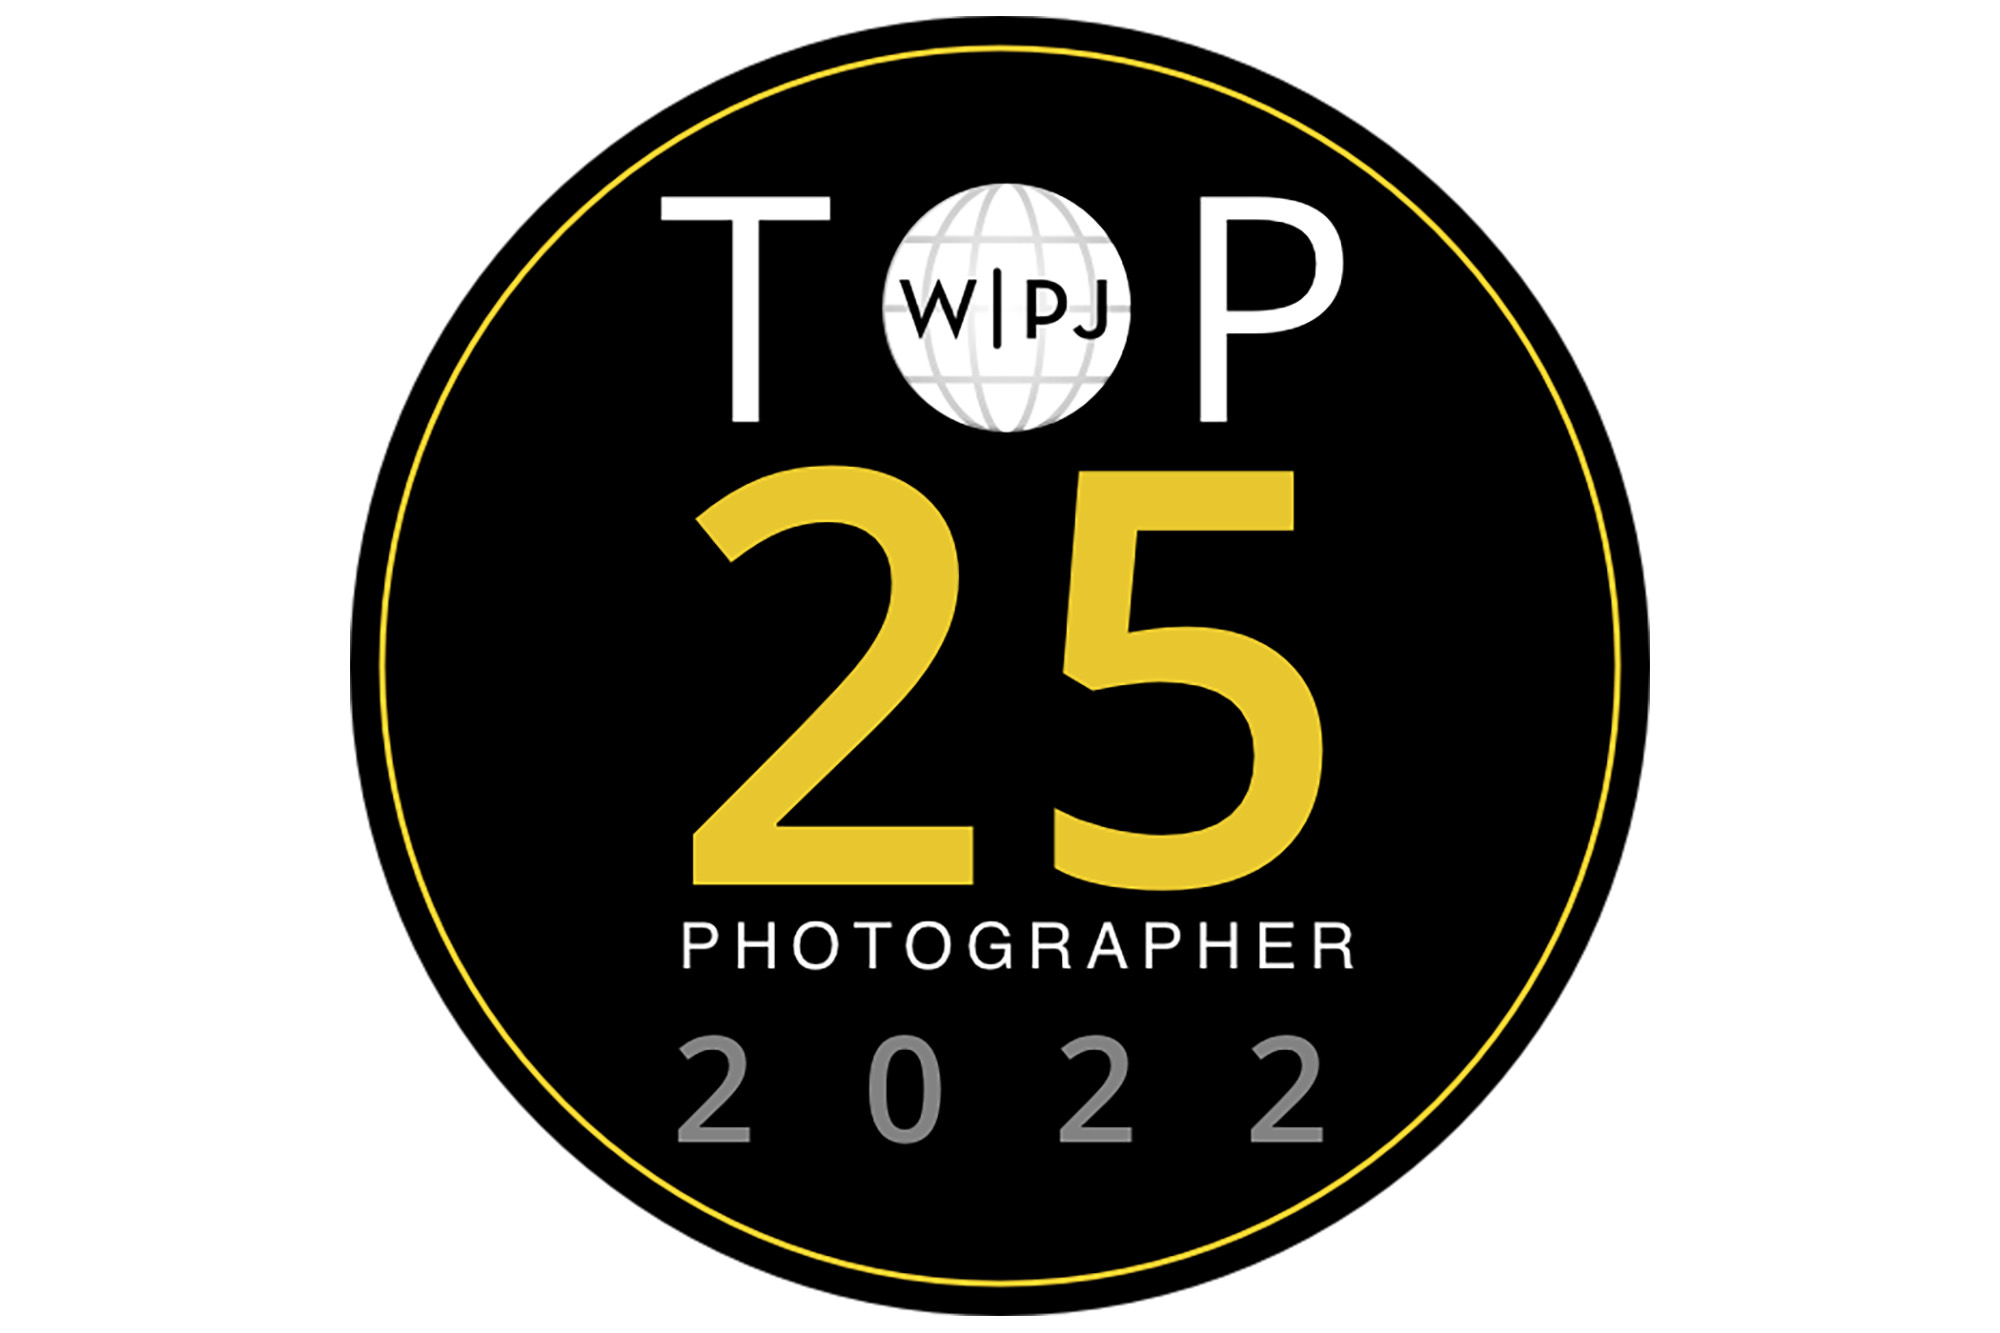 Top WPJA Wedding Photographer in 2022